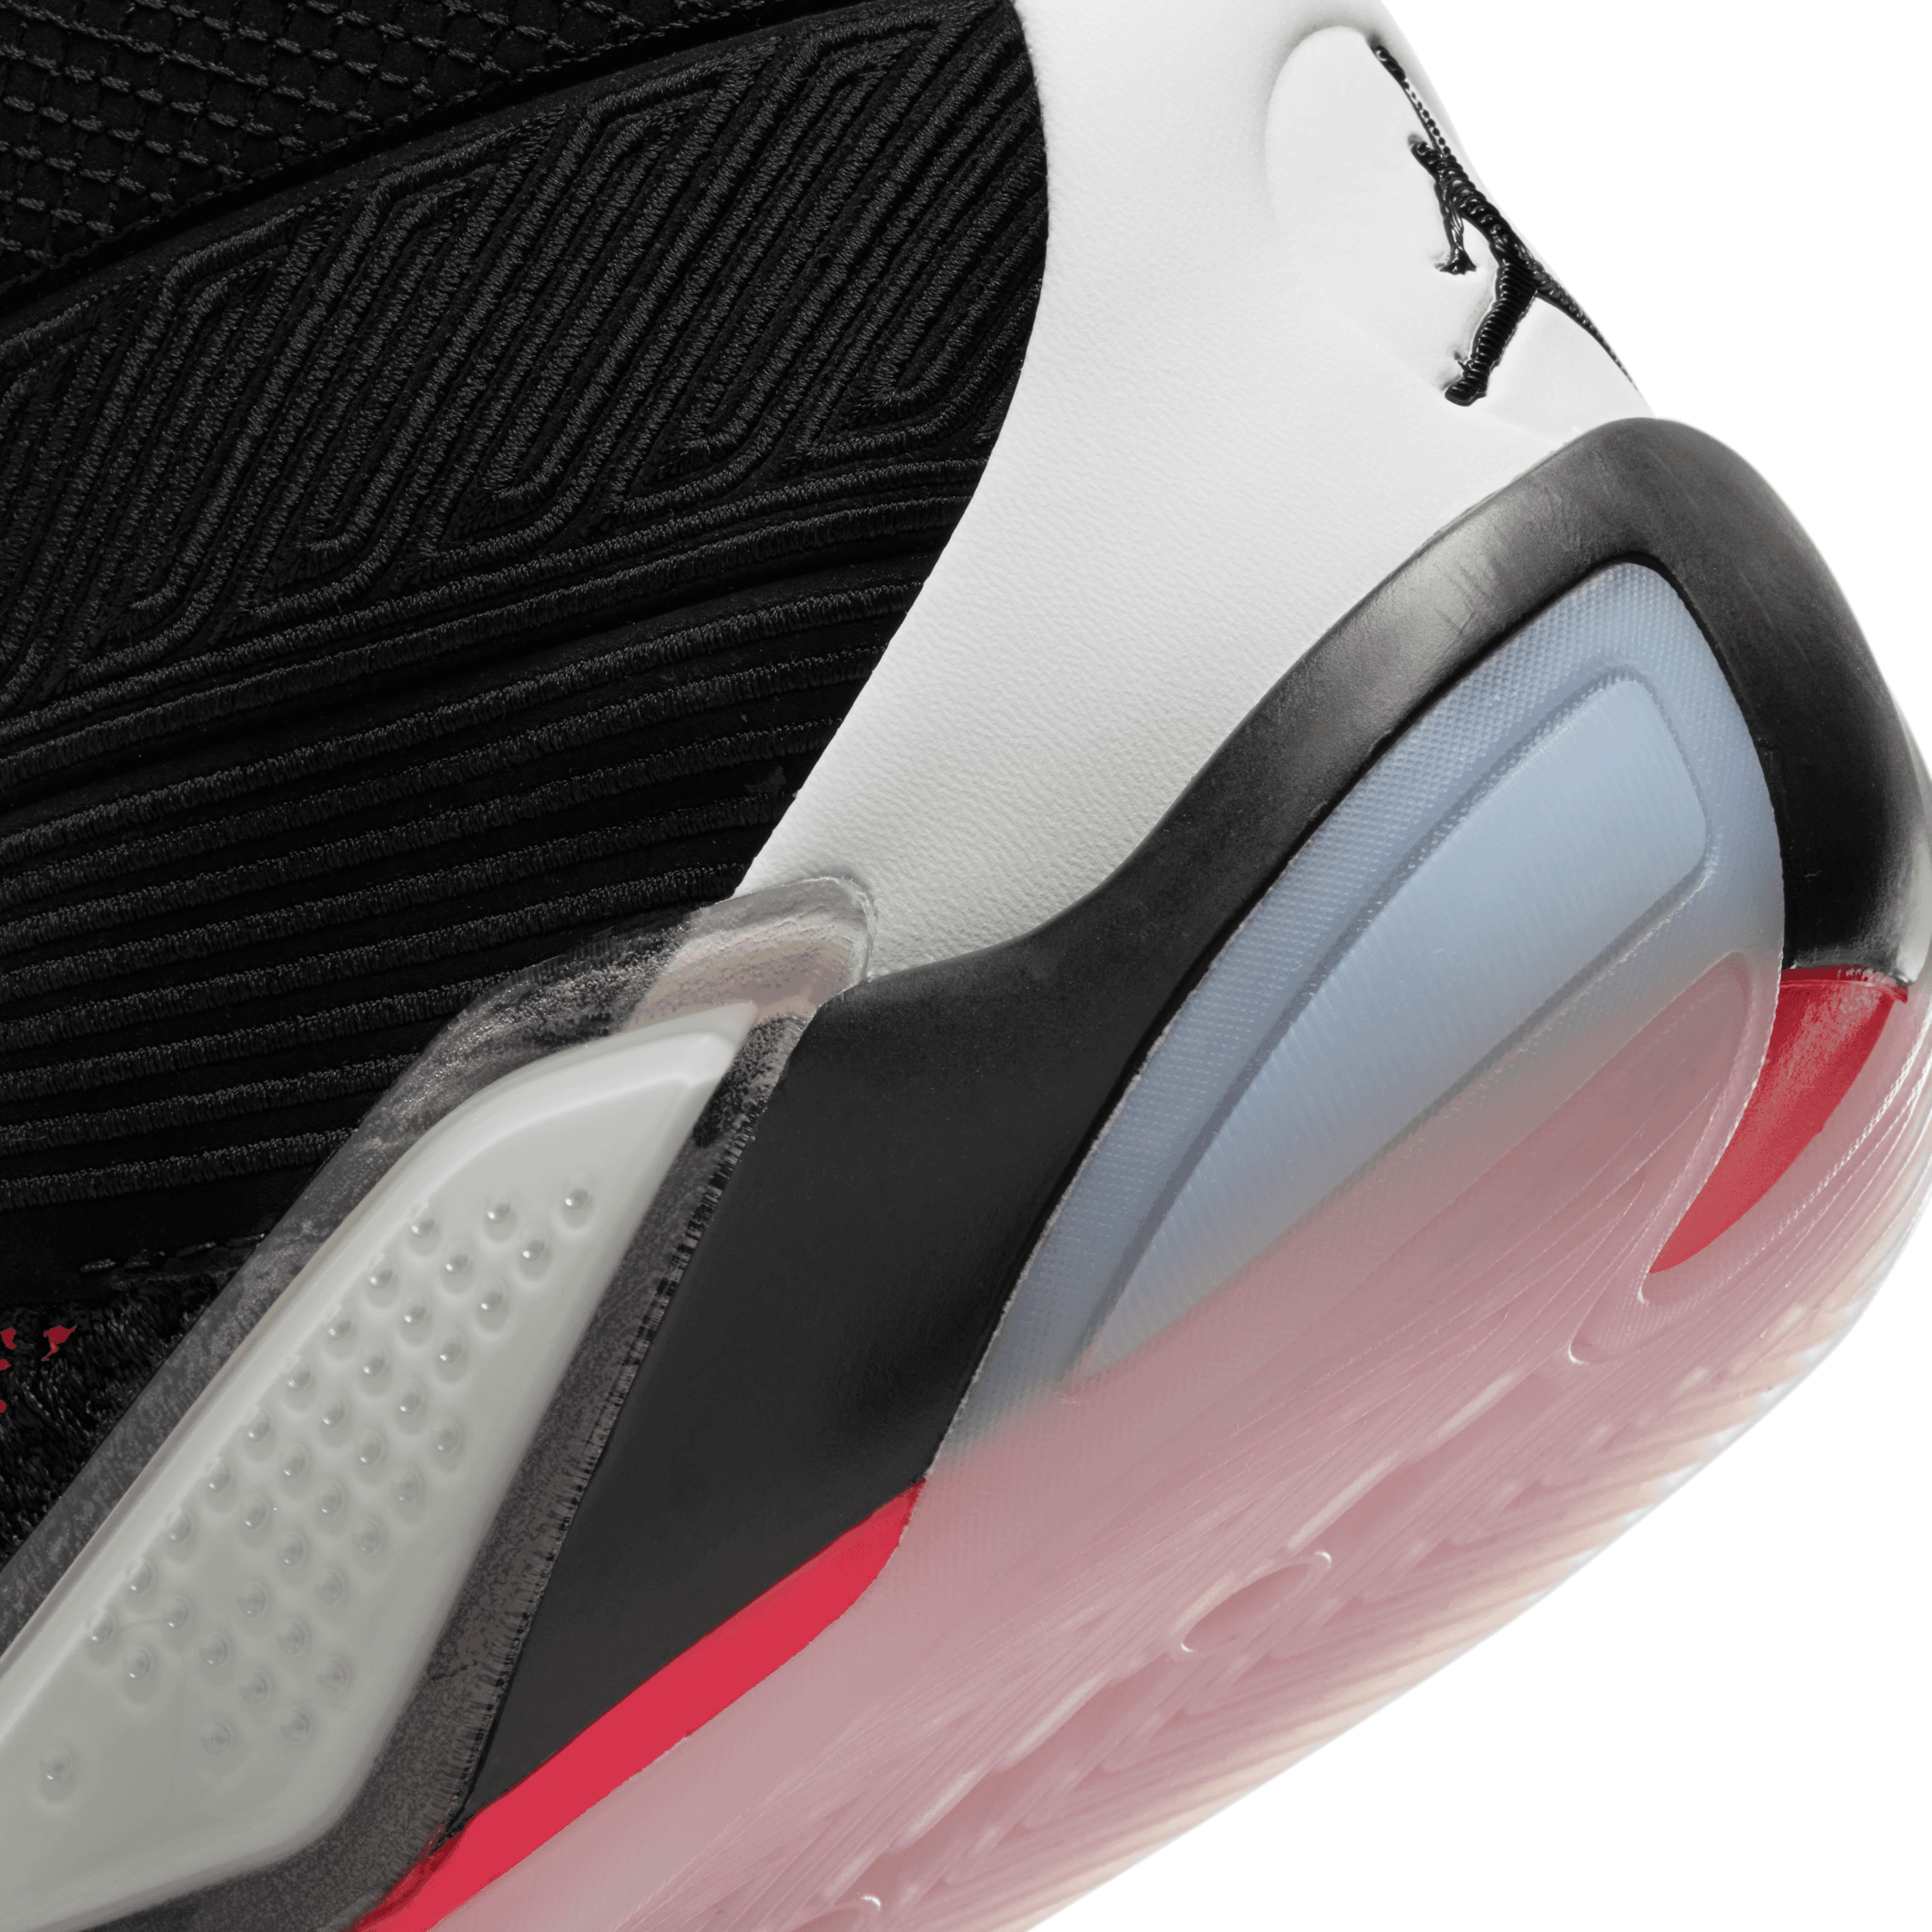 Jordan Brand Unveils the Air Jordan 38